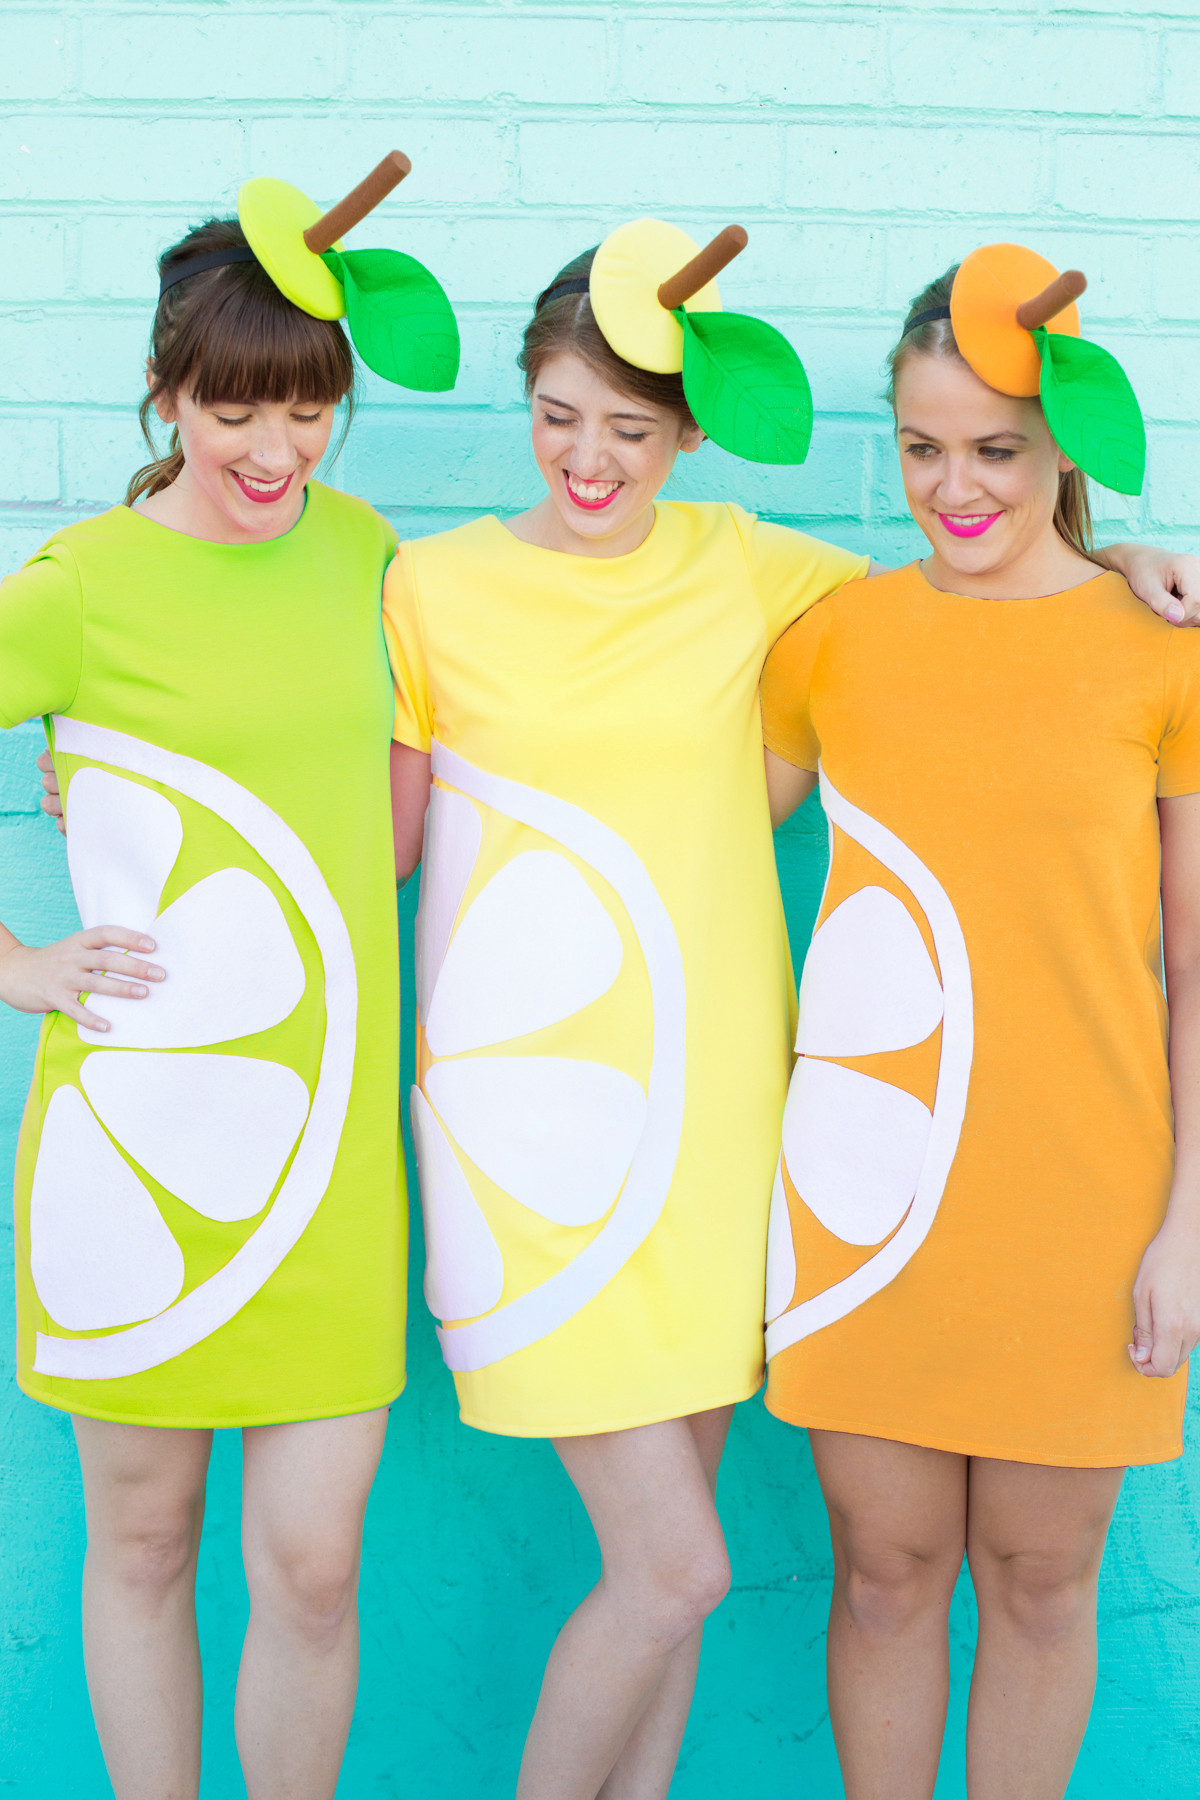 Best ideas about DIY Fruit Costumes
. Save or Pin DIY Citrus Slice Costumes Studio DIY Now.